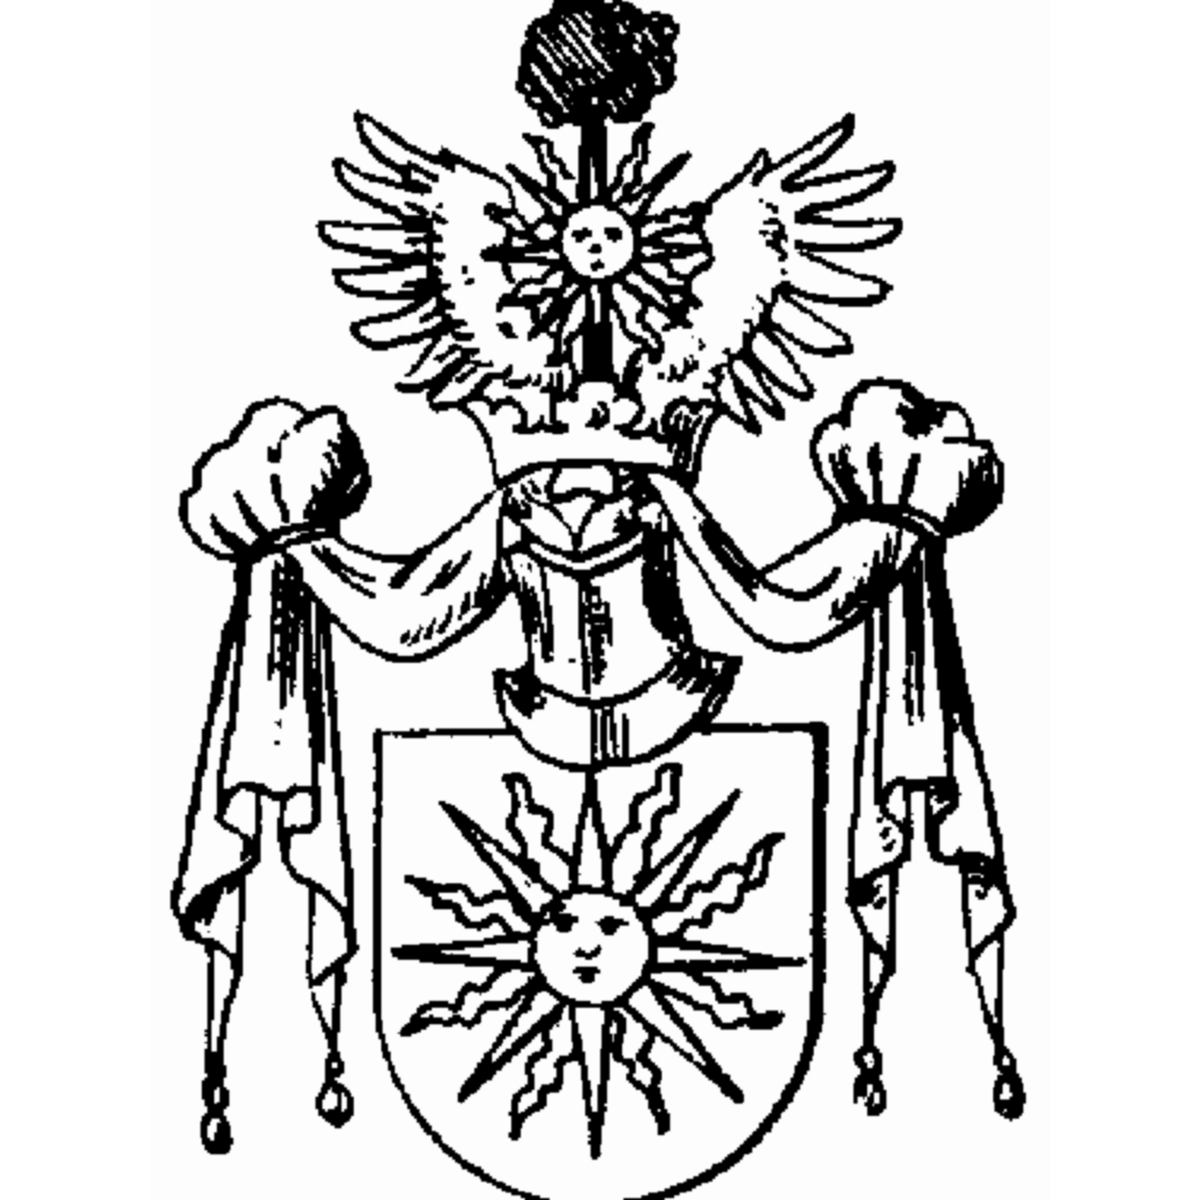 Brasão da família Dürn-Dilsberg